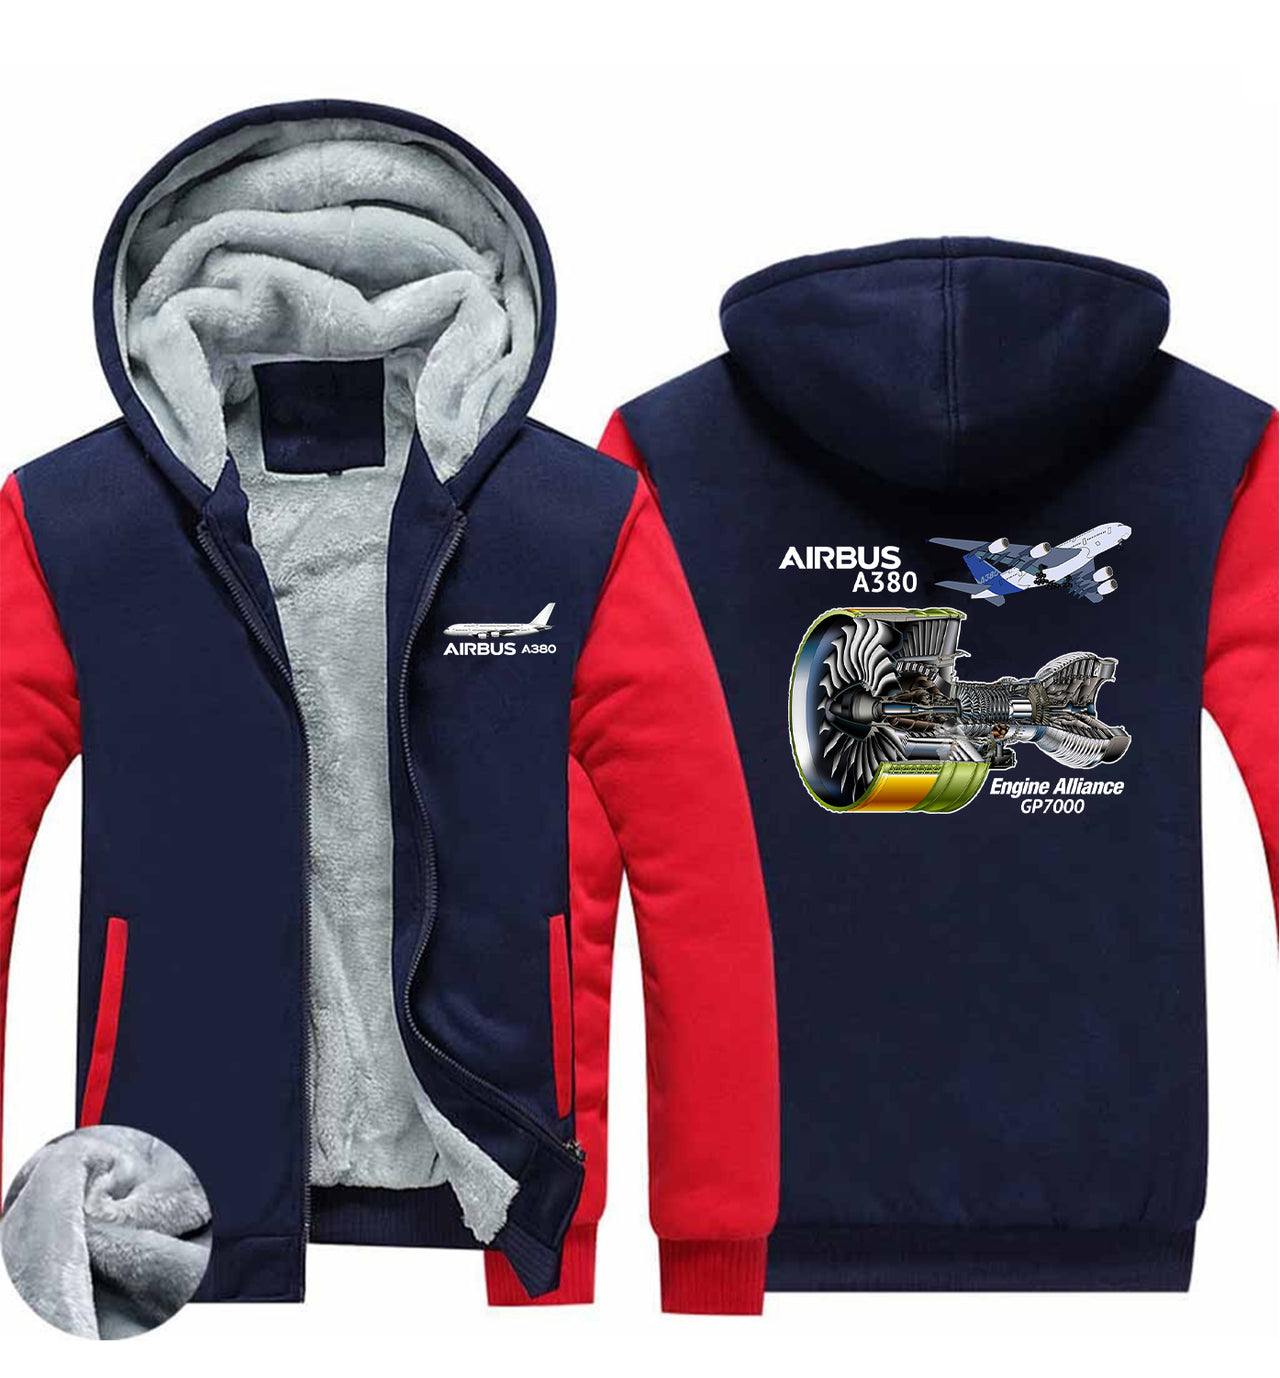 Airbus A380 & GP7000 Engine Designed Zipped Sweatshirts